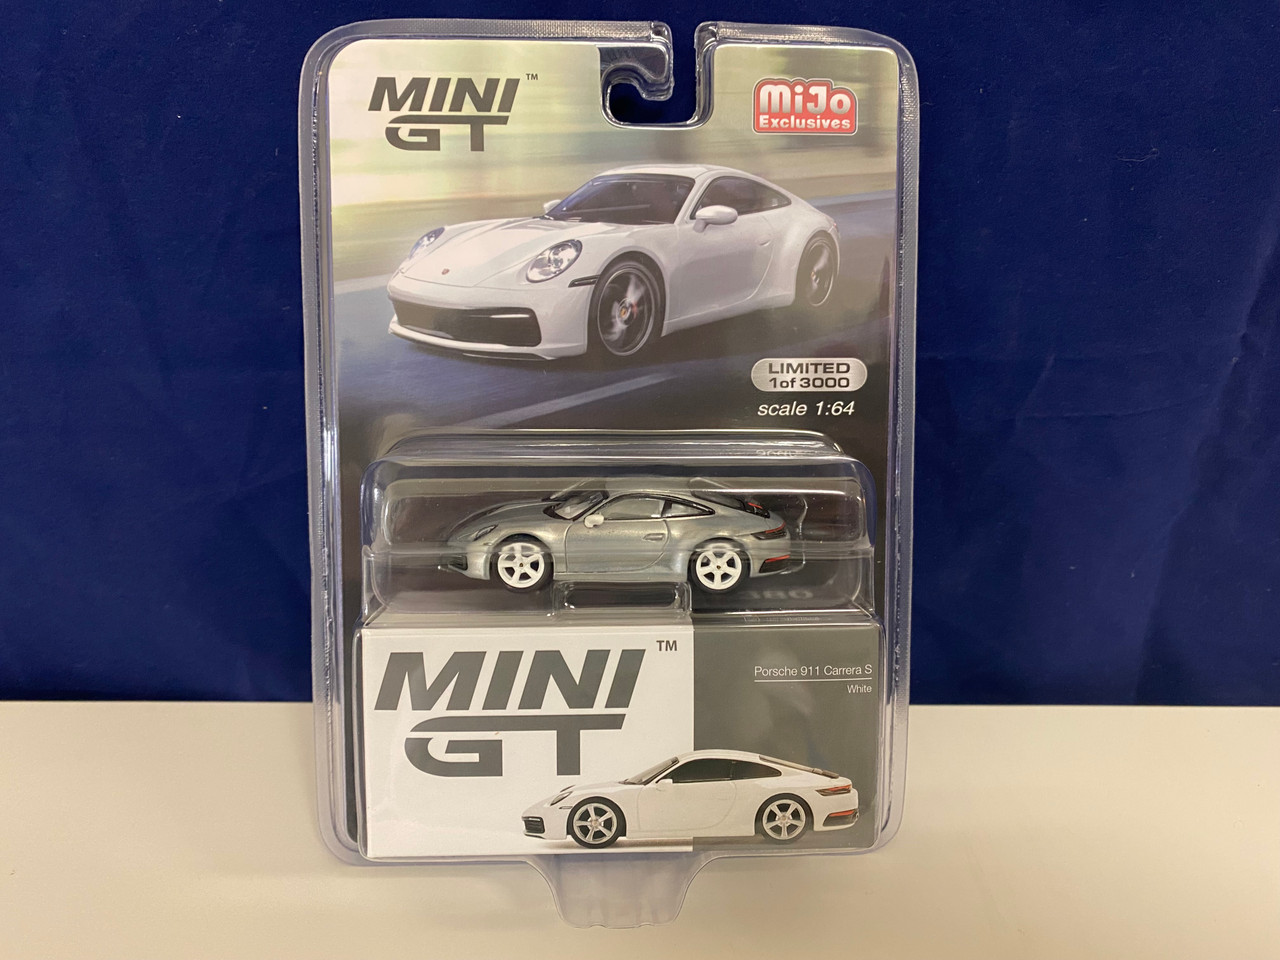 MINI GT True Scale Miniatures Porsche 911 Carrera 4S Racing Yellow